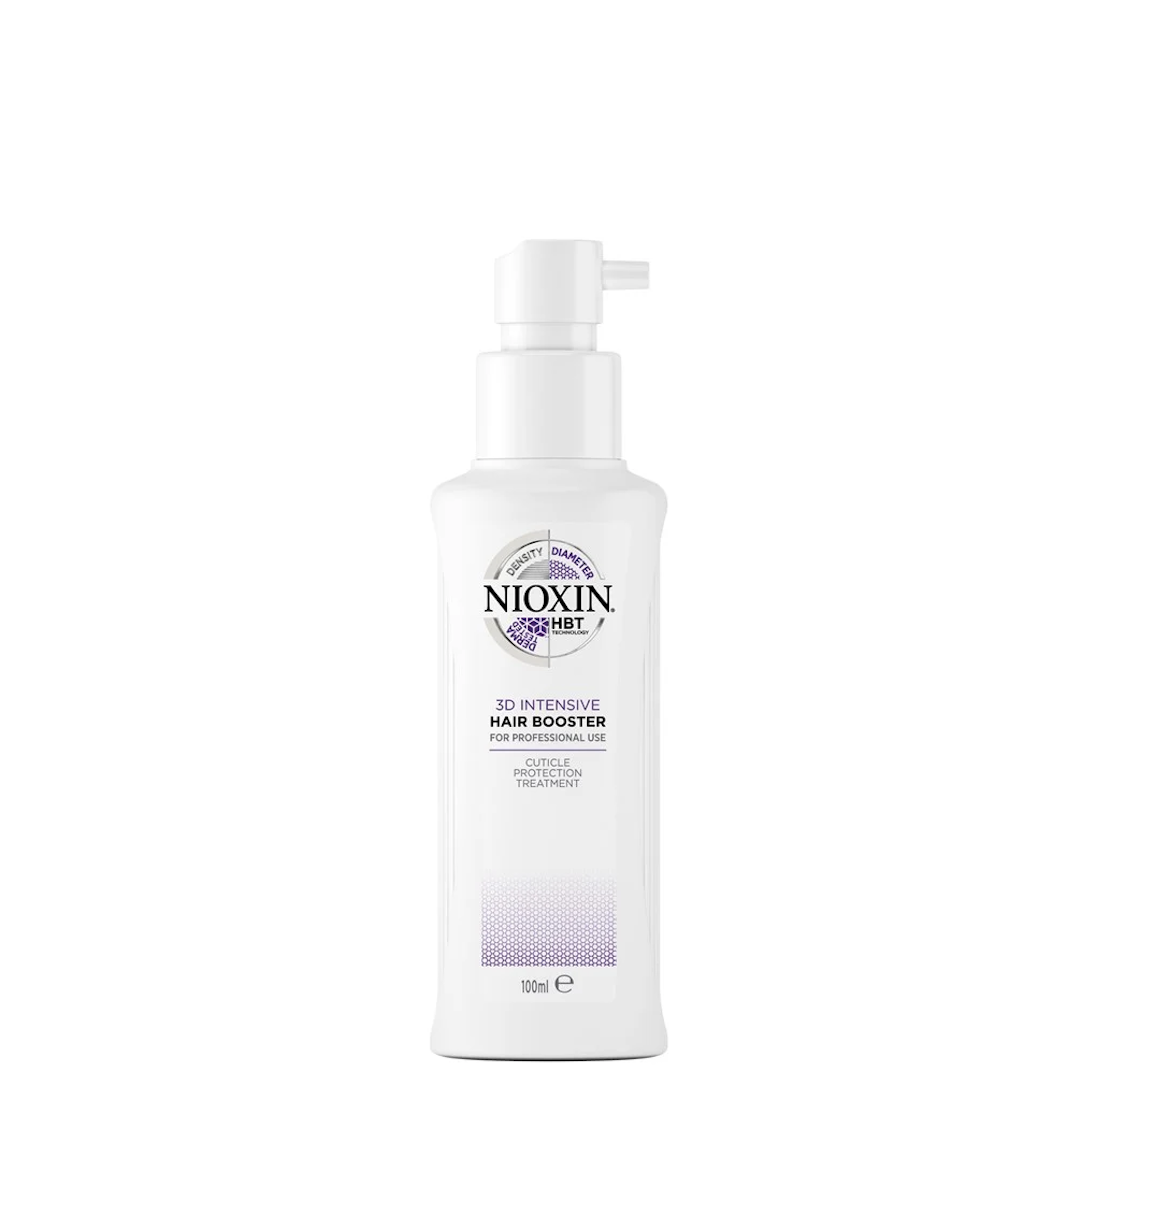 hair growth product: Nioxin